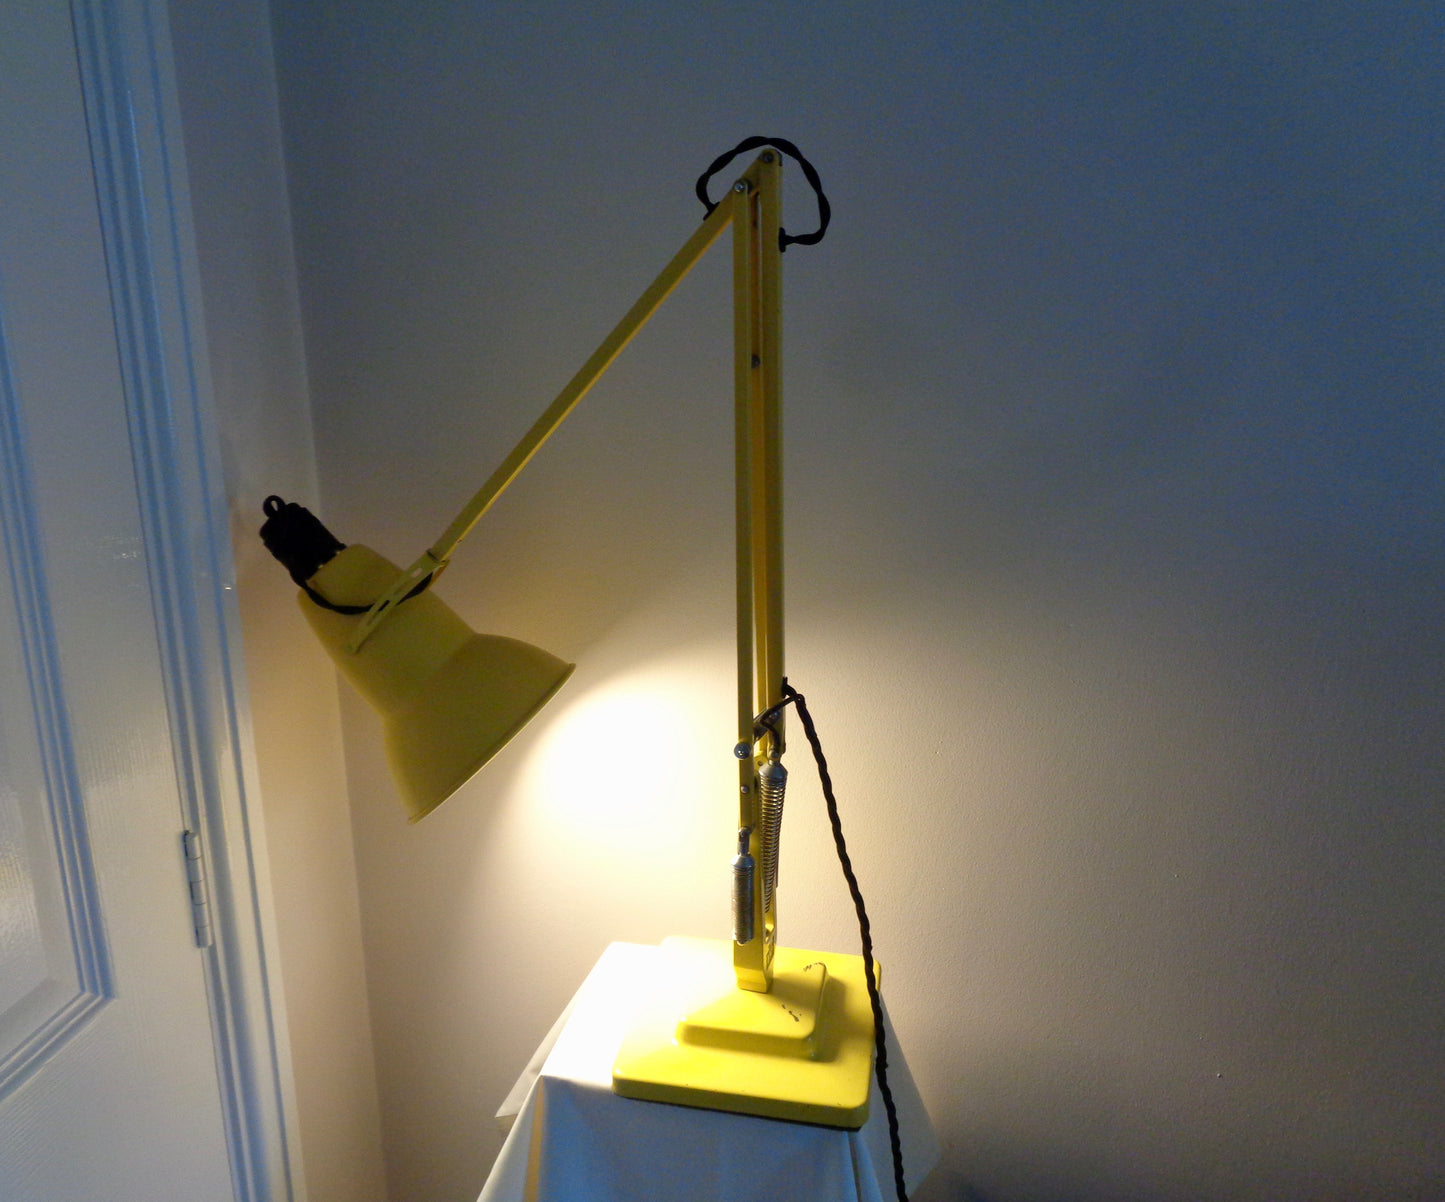 1950s Yellow 1227 Anglepoise Herbert Terry Desk Lamp